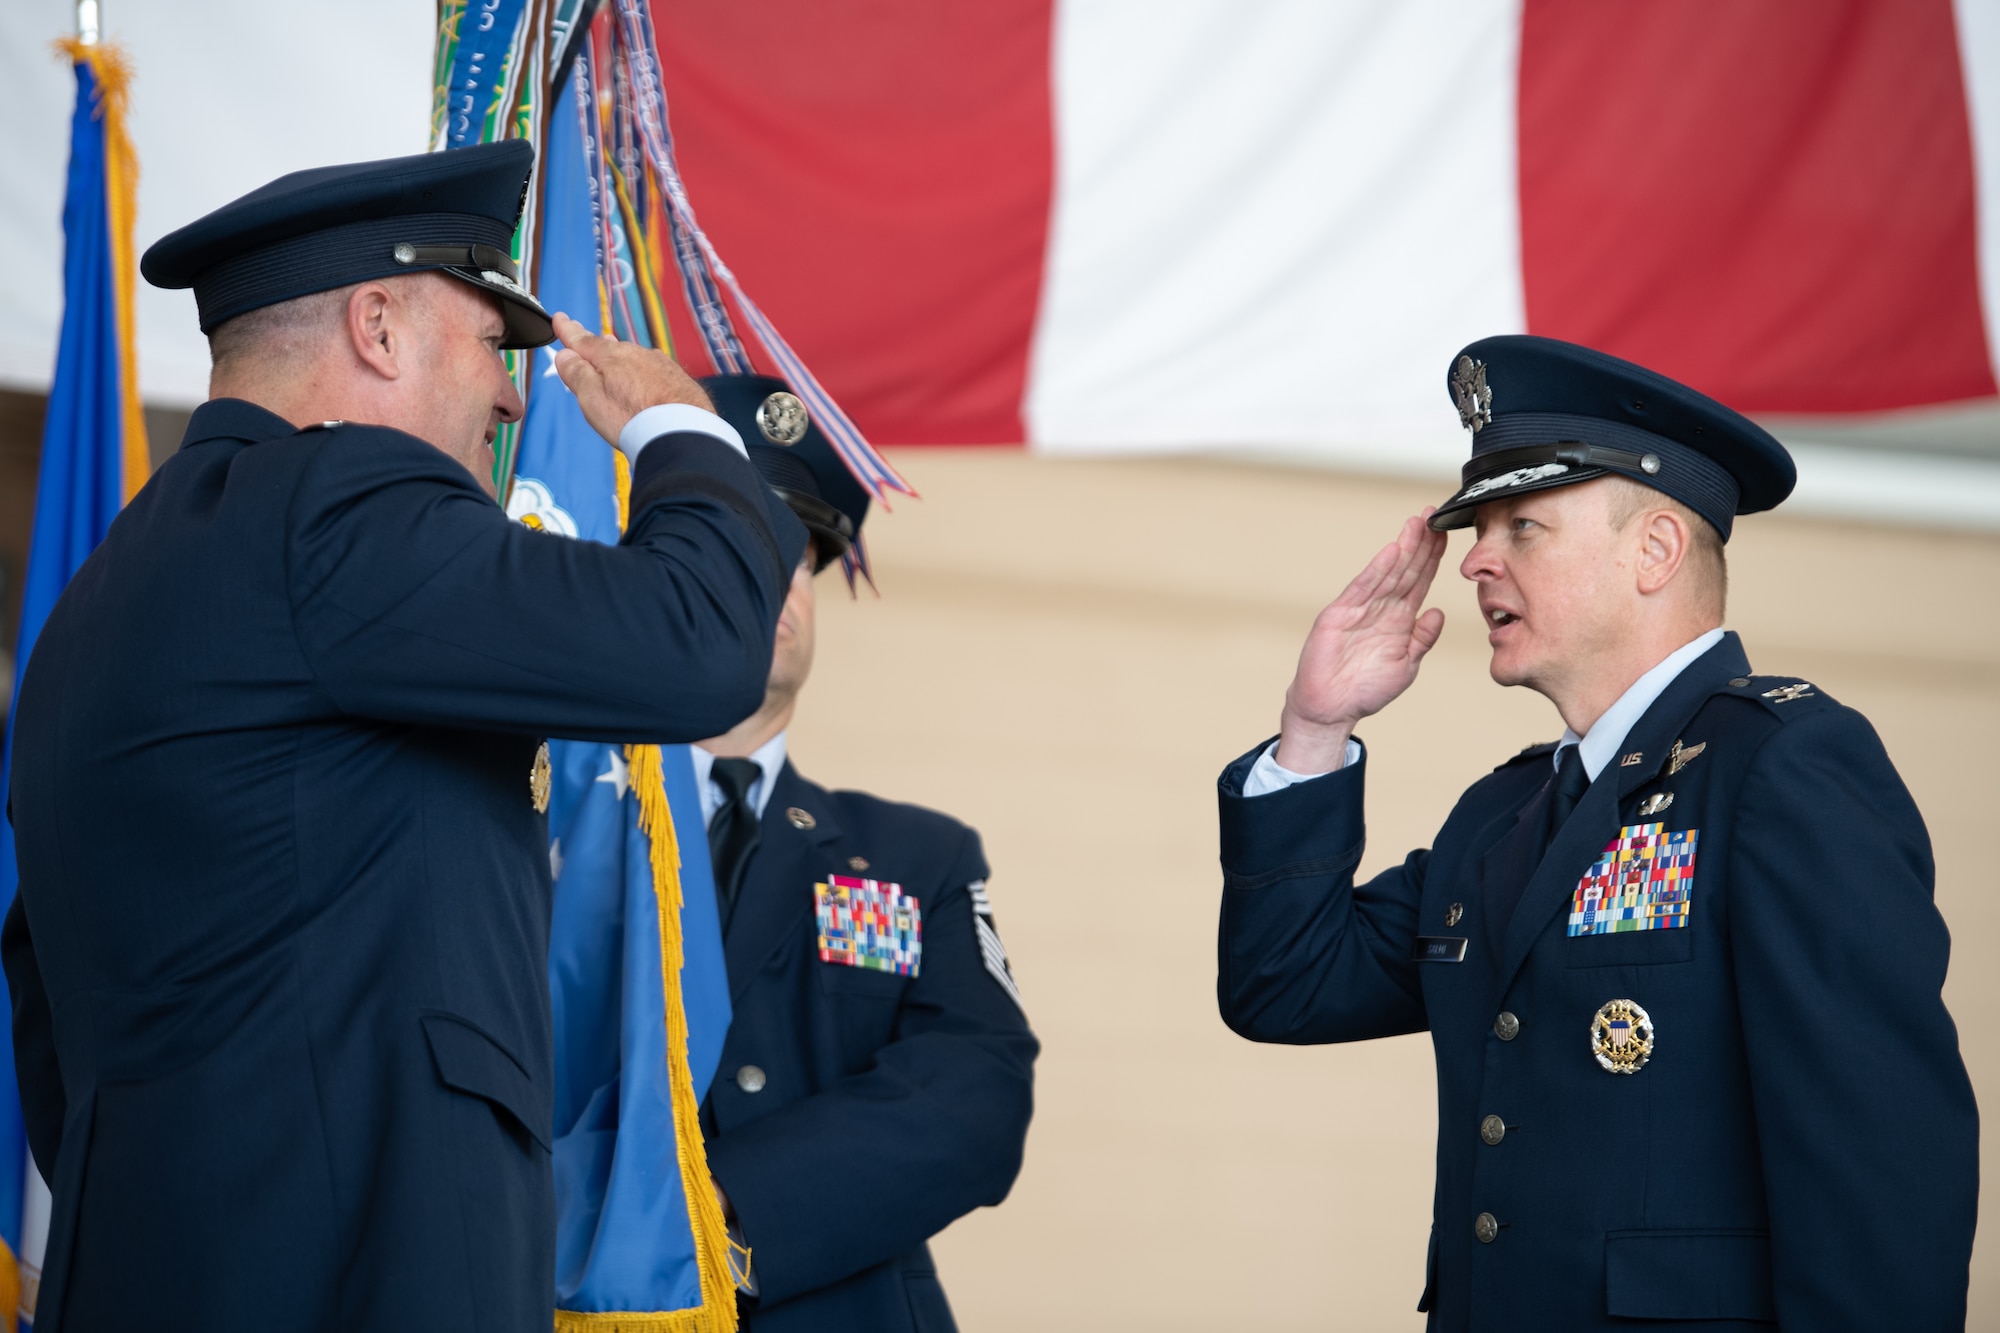 Higher ranking Airmen salute each other.